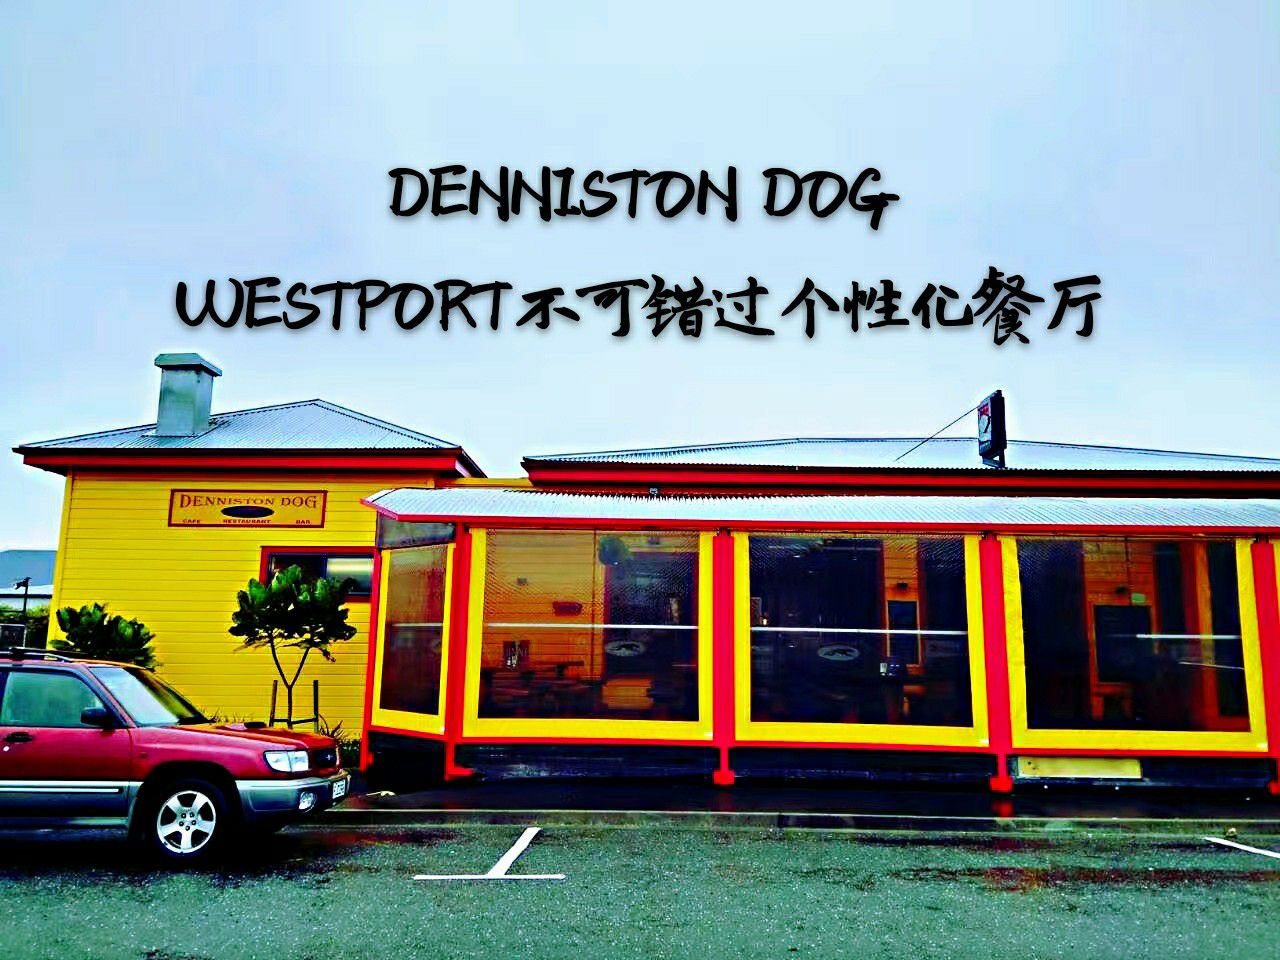 DENNISTON DOG，WESTPORT的一家综合性餐厅，原本不是我们的目标，西海岸的天气说变就